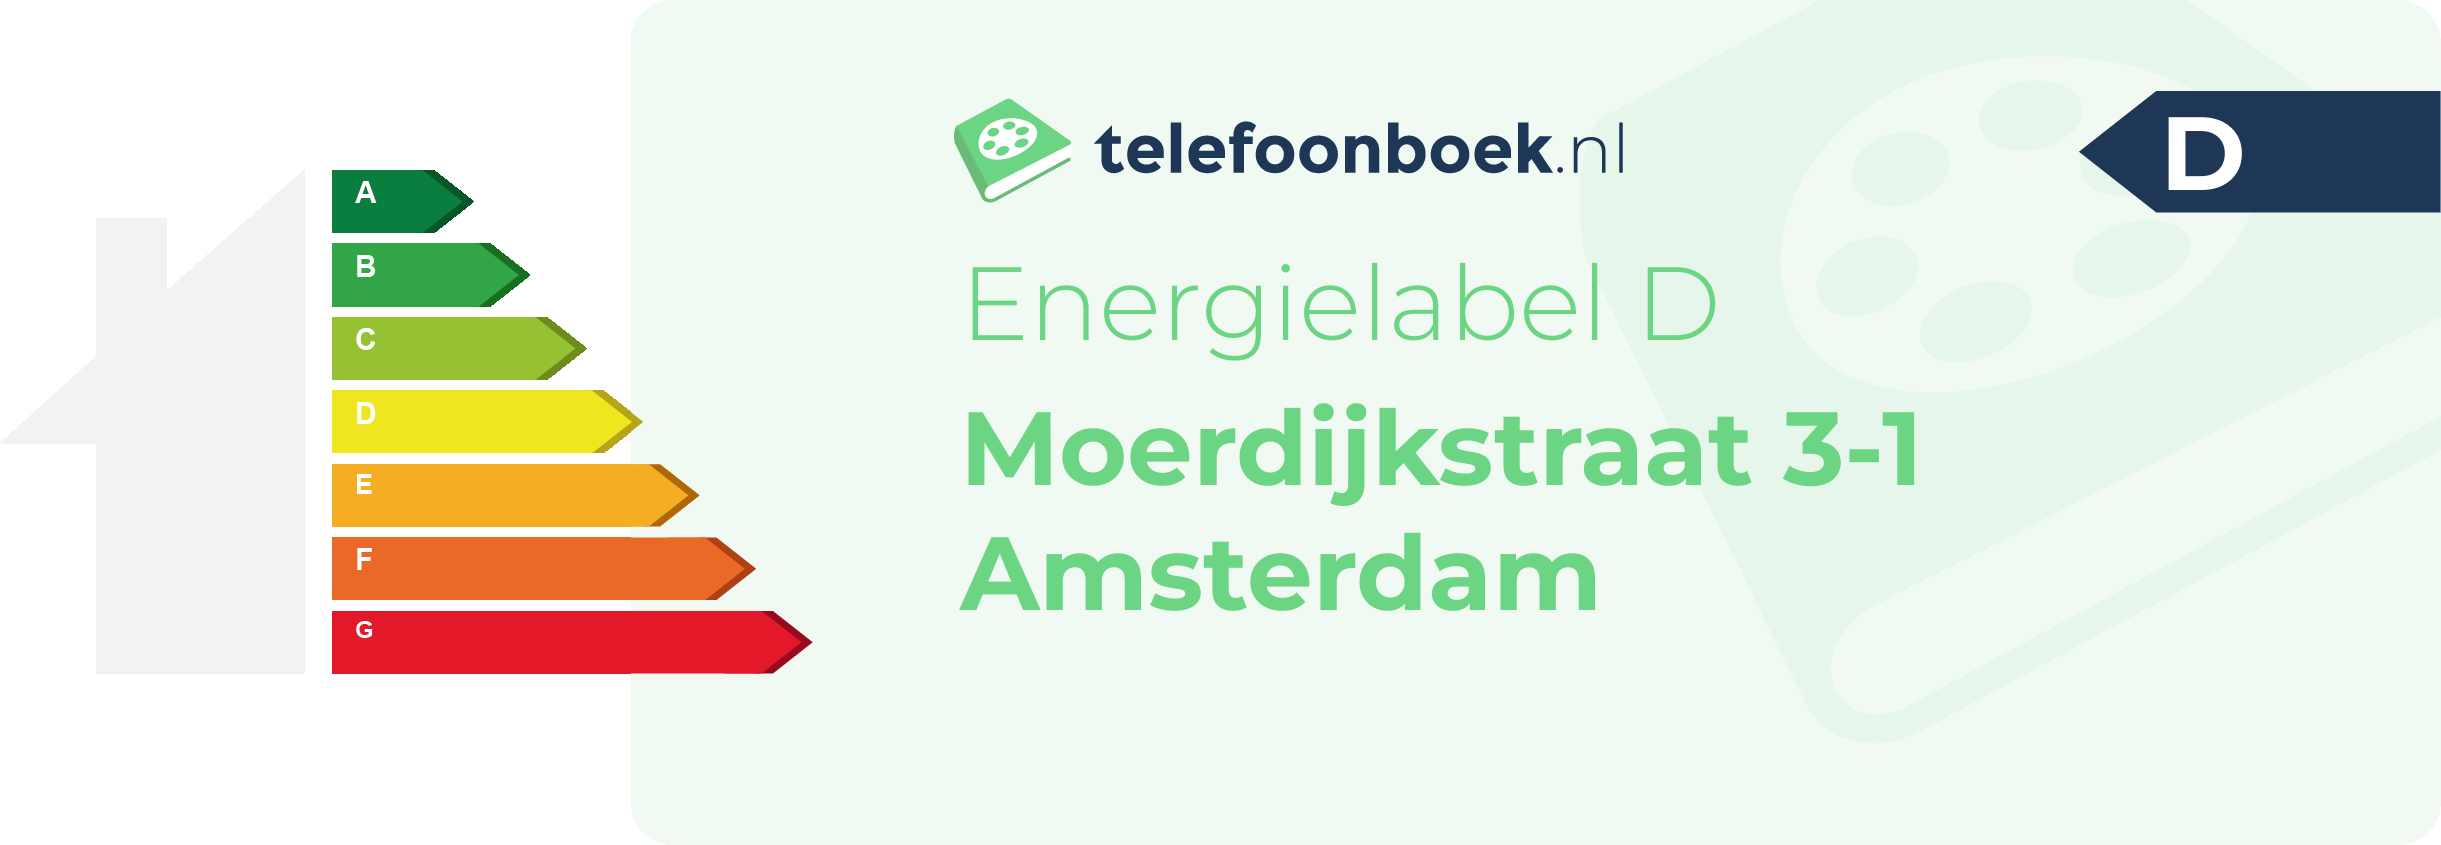 Energielabel Moerdijkstraat 3-1 Amsterdam